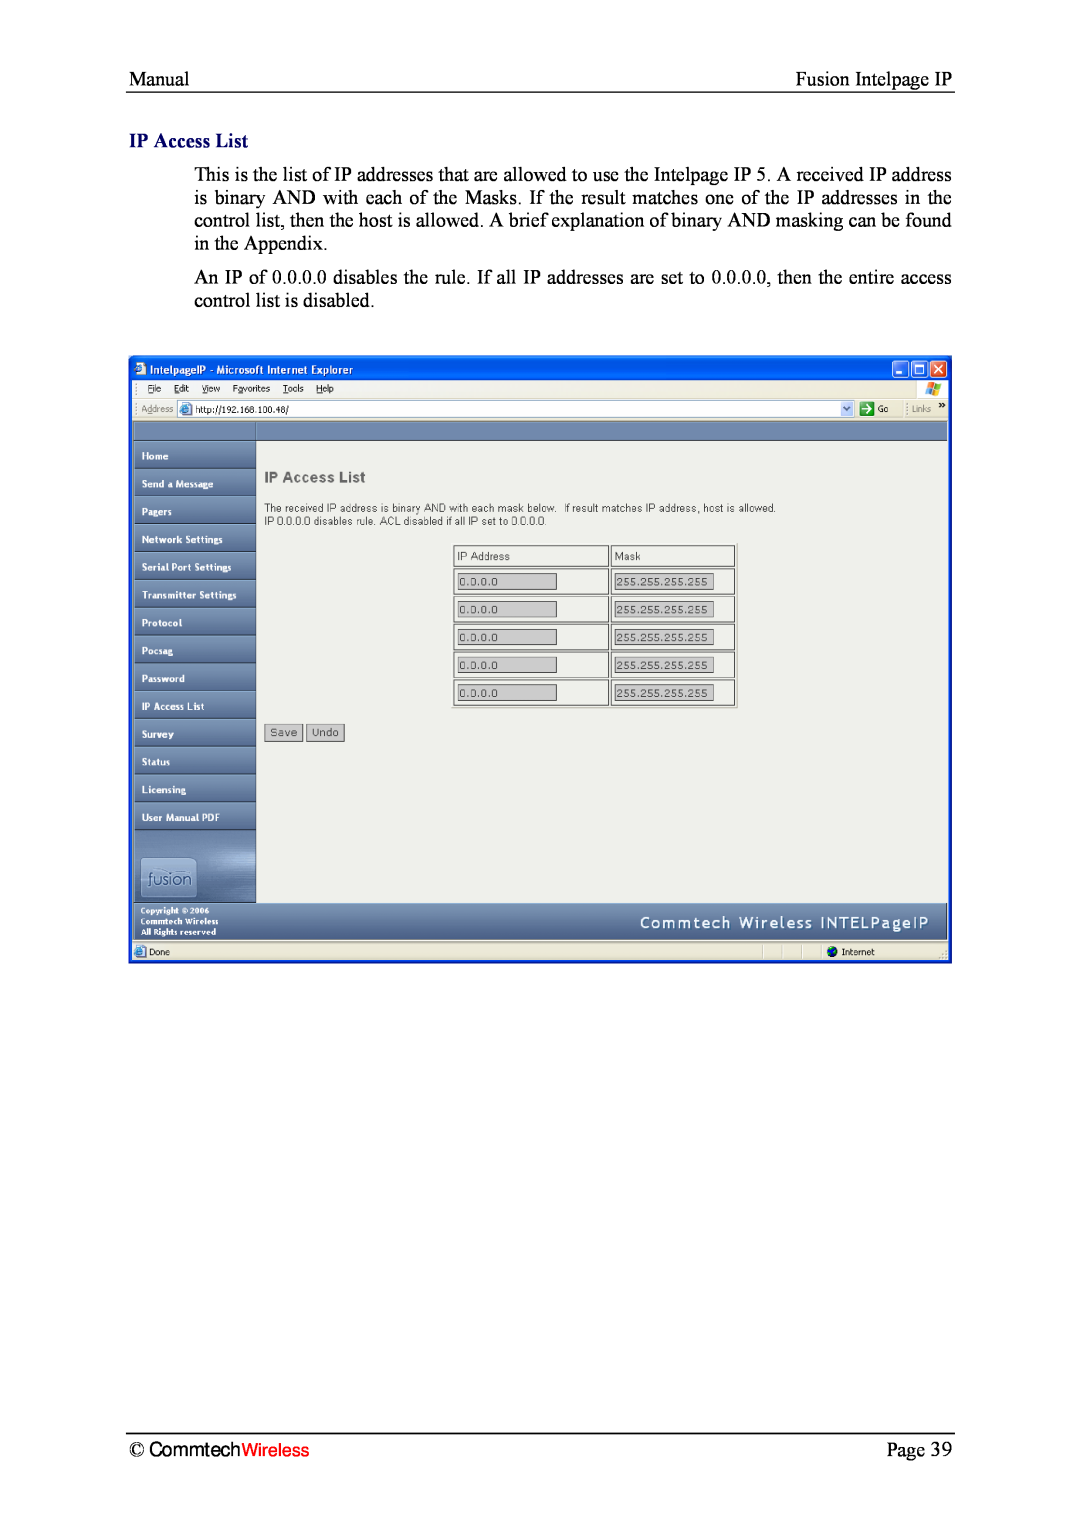 Fusion INTELPage IP 5, 2.1 manual CommtechWireless, Manual, IP Access List 